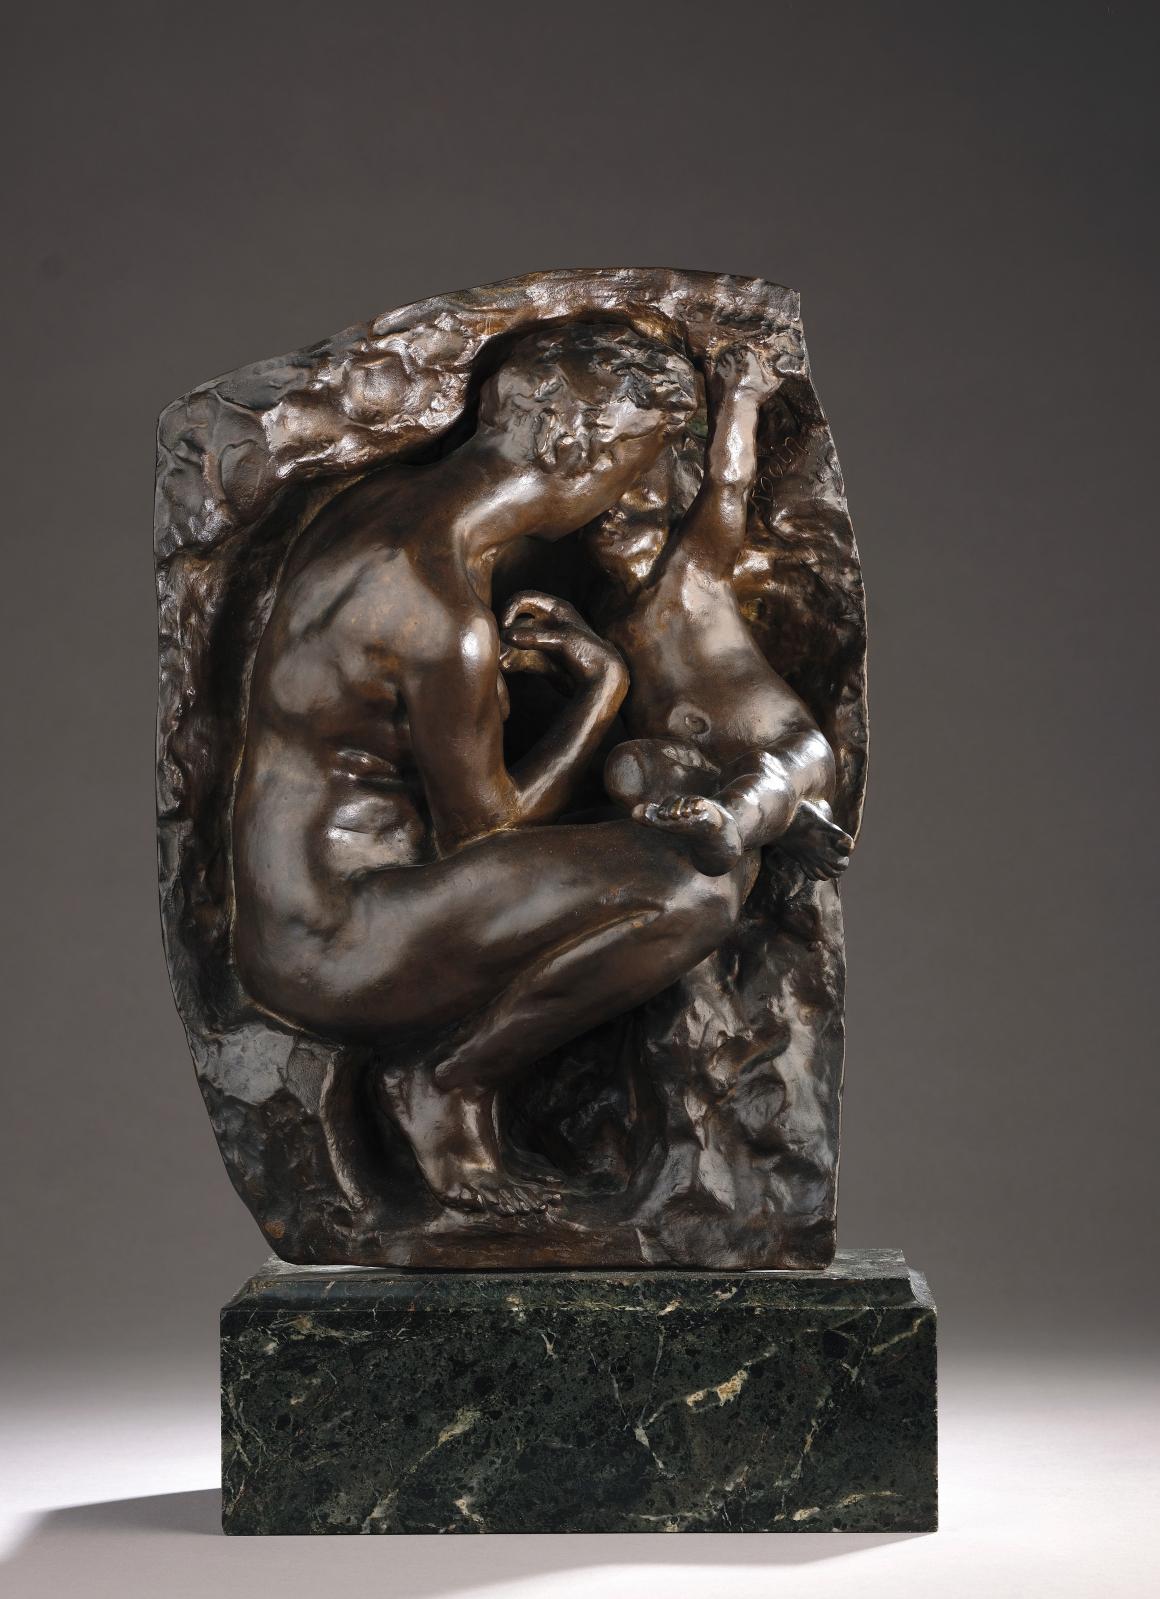 L’amour maternel selon Auguste Rodin